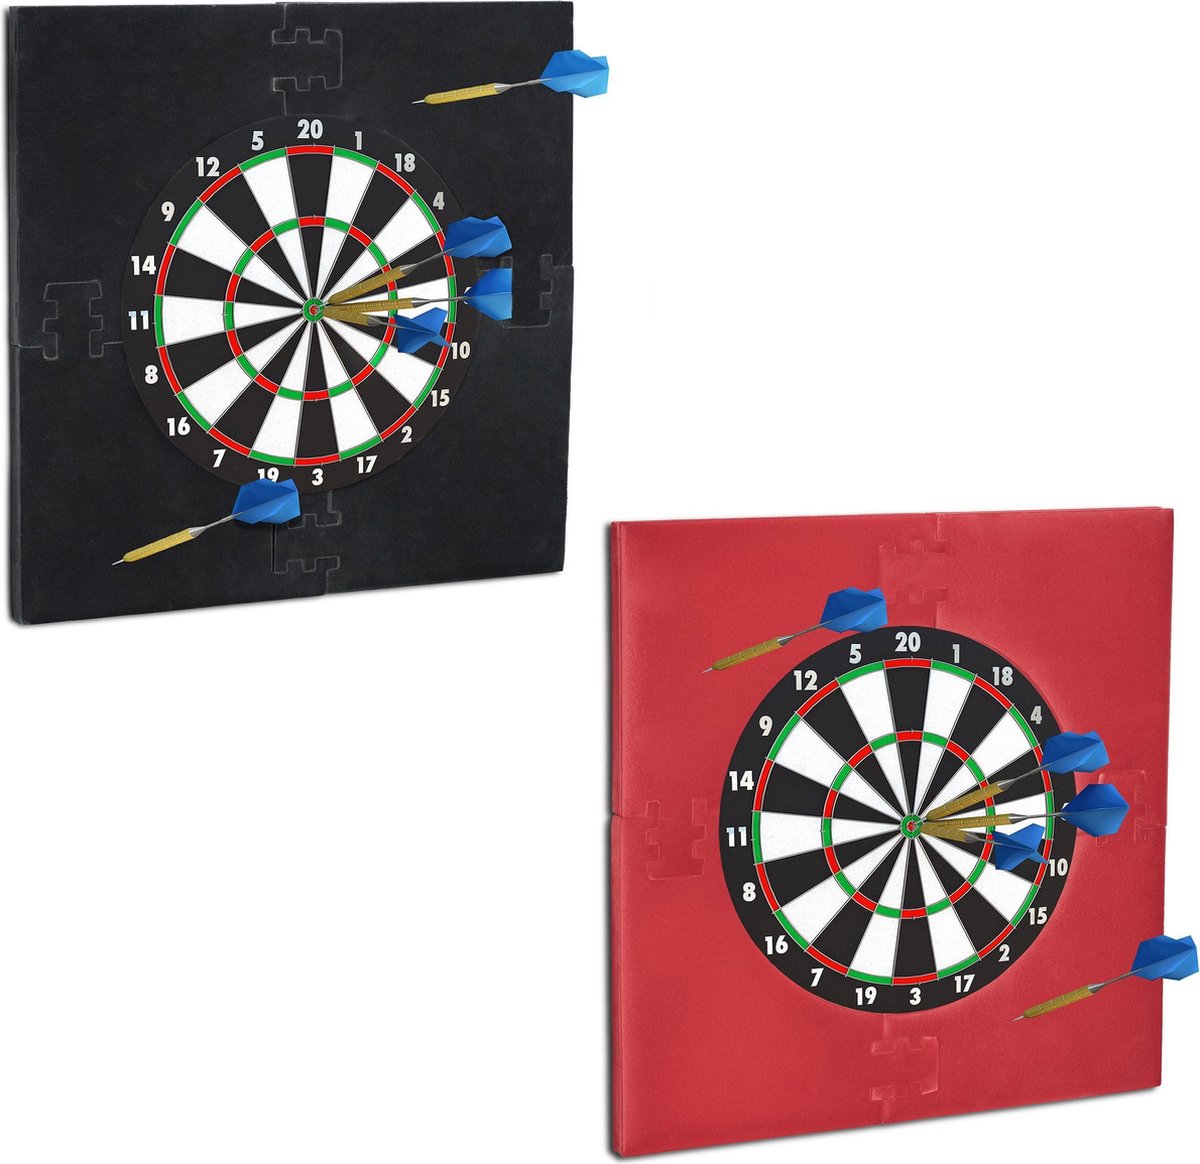 Relaxdays dartbord surround ring - beschermrand - beschermring - ring voor dartbord - 45cm - rood